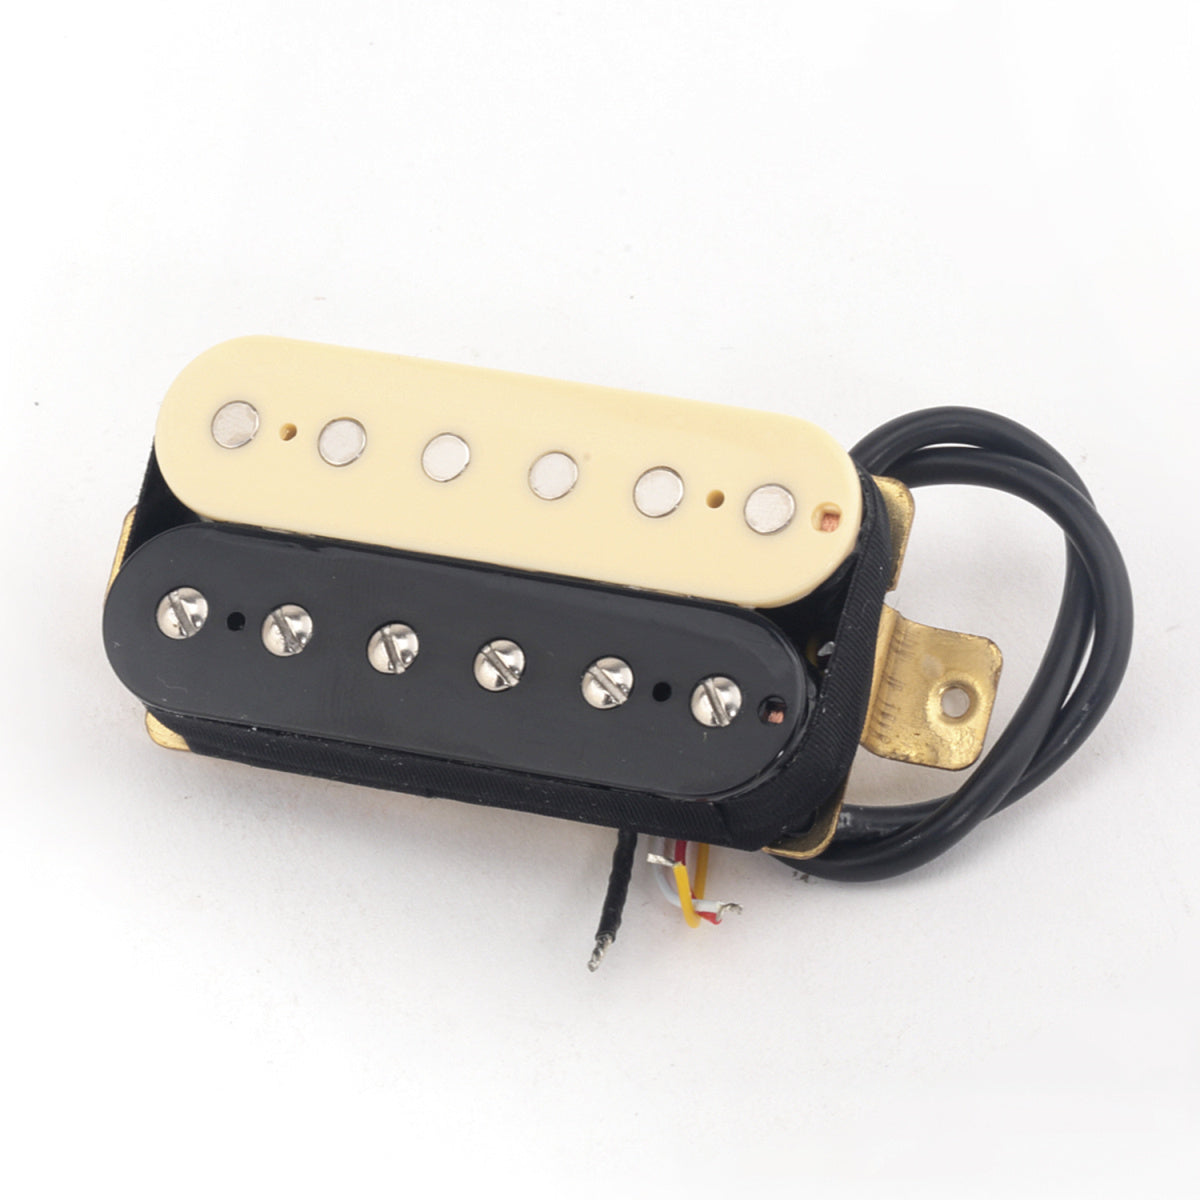 Musiclily Pro 52mm Humbucker Pickup for Electric Guitar Bridge, Zebra